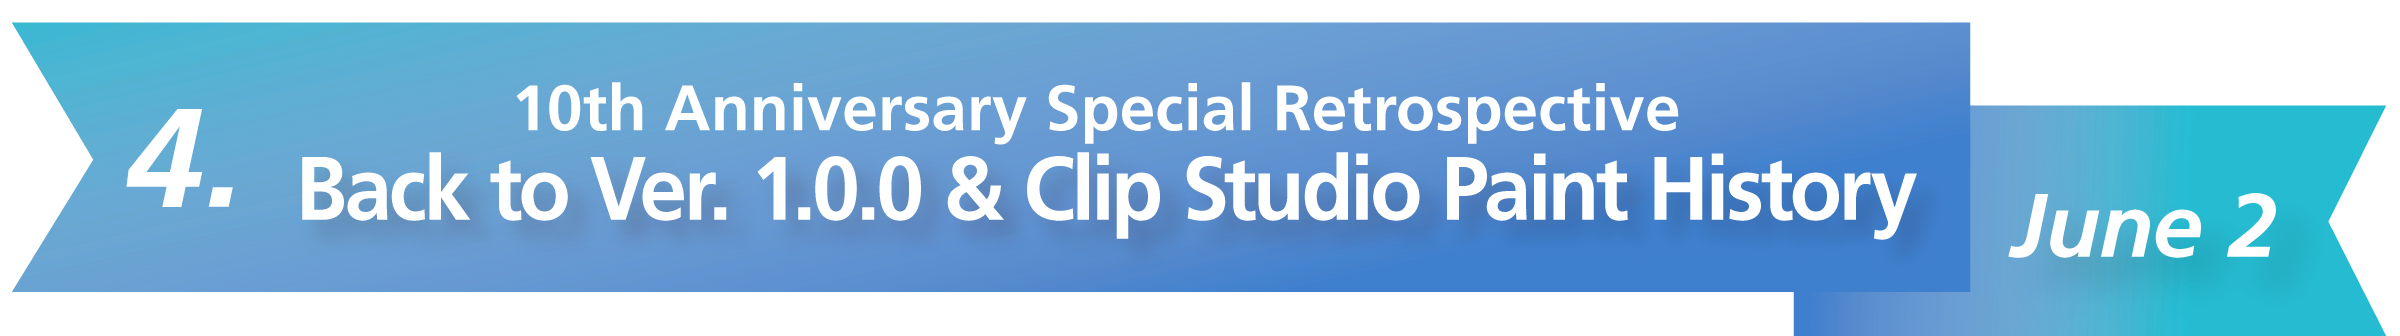 4. 10th Anniversary Special Retrospective Back to Ver. 1.0.0 & Clip Studio Paint History June 2